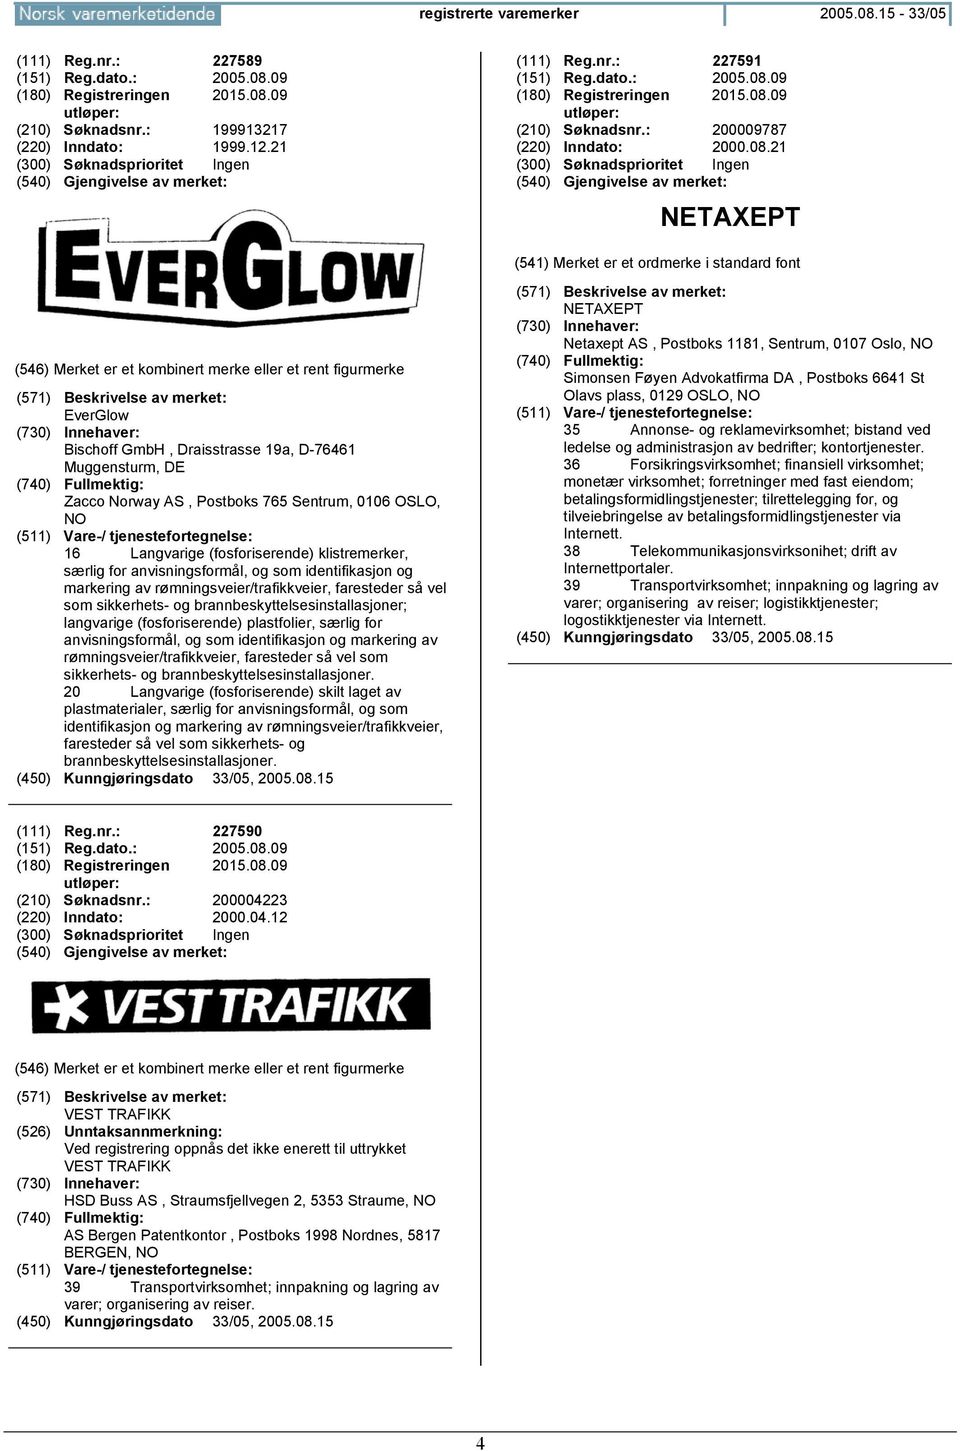 21 NETAXEPT EverGlow Bischoff GmbH, Draisstrasse 19a, D-76461 Muggensturm, DE Zacco Norway AS, Postboks 765 Sentrum, 0106 OSLO, 16 Langvarige (fosforiserende) klistremerker, særlig for